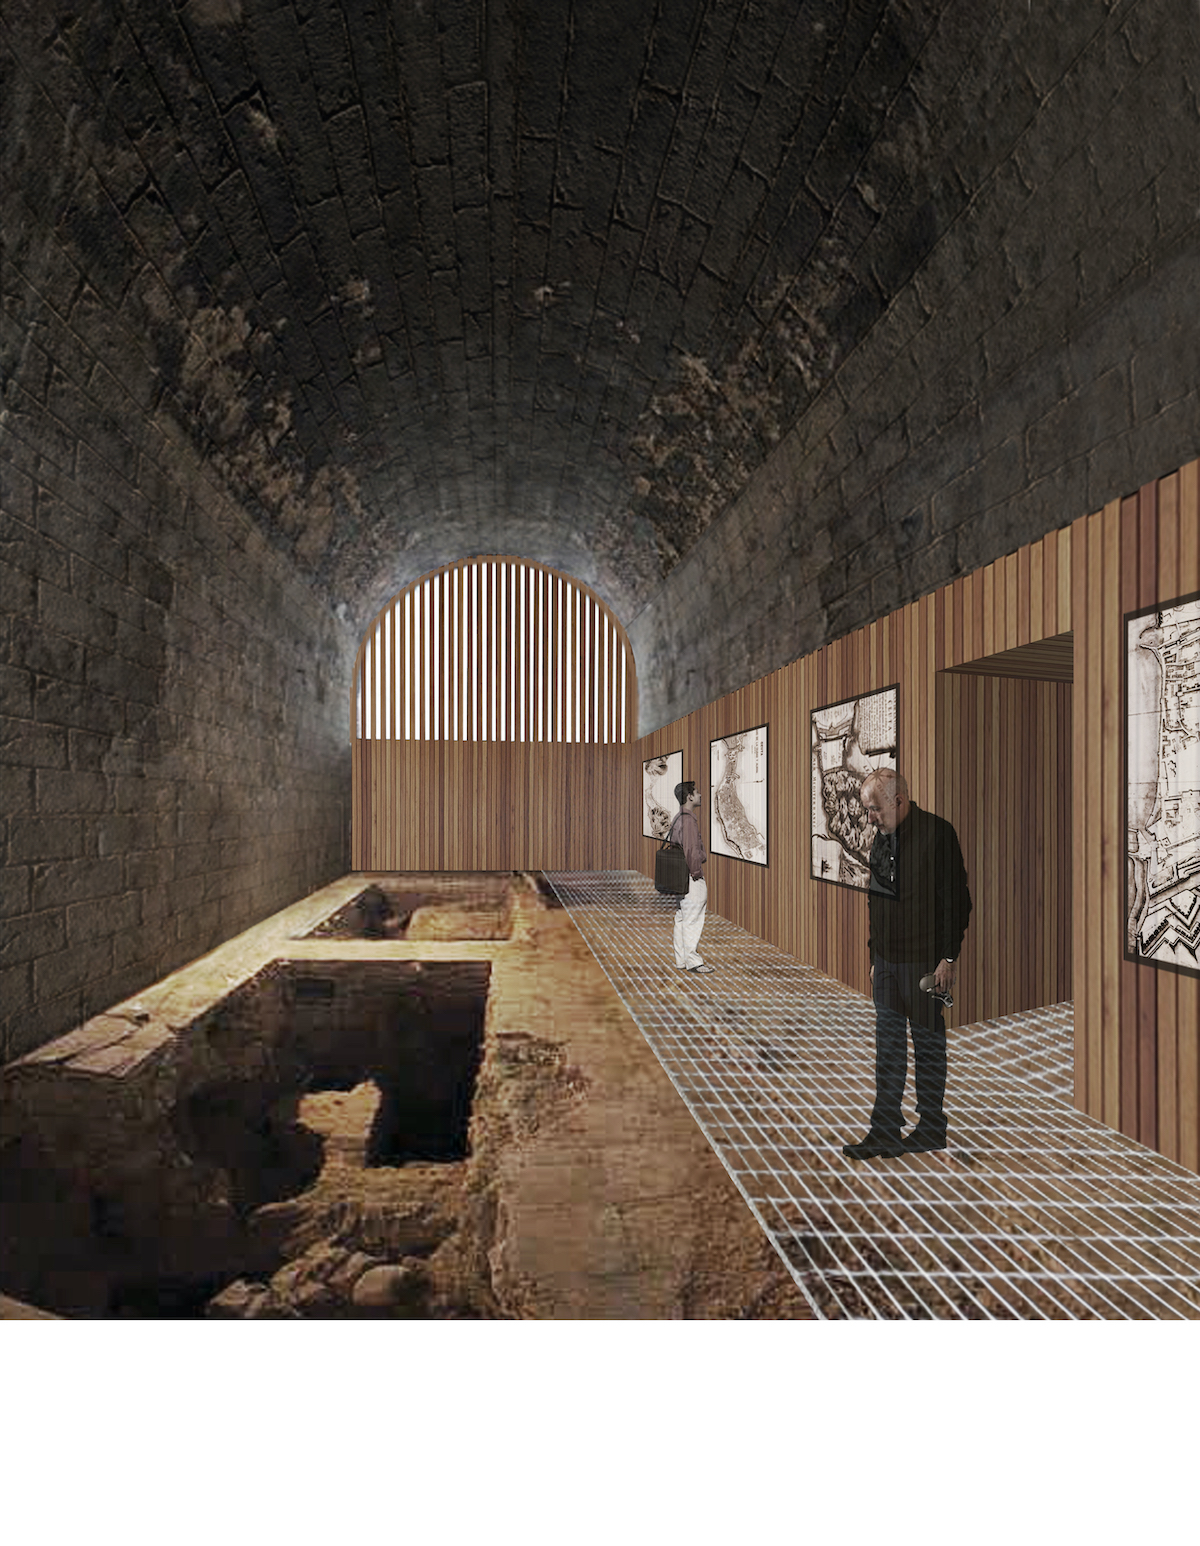 Rehabilitation of the Baluarte de la Bandera and attached vaults for use as an interpretation center